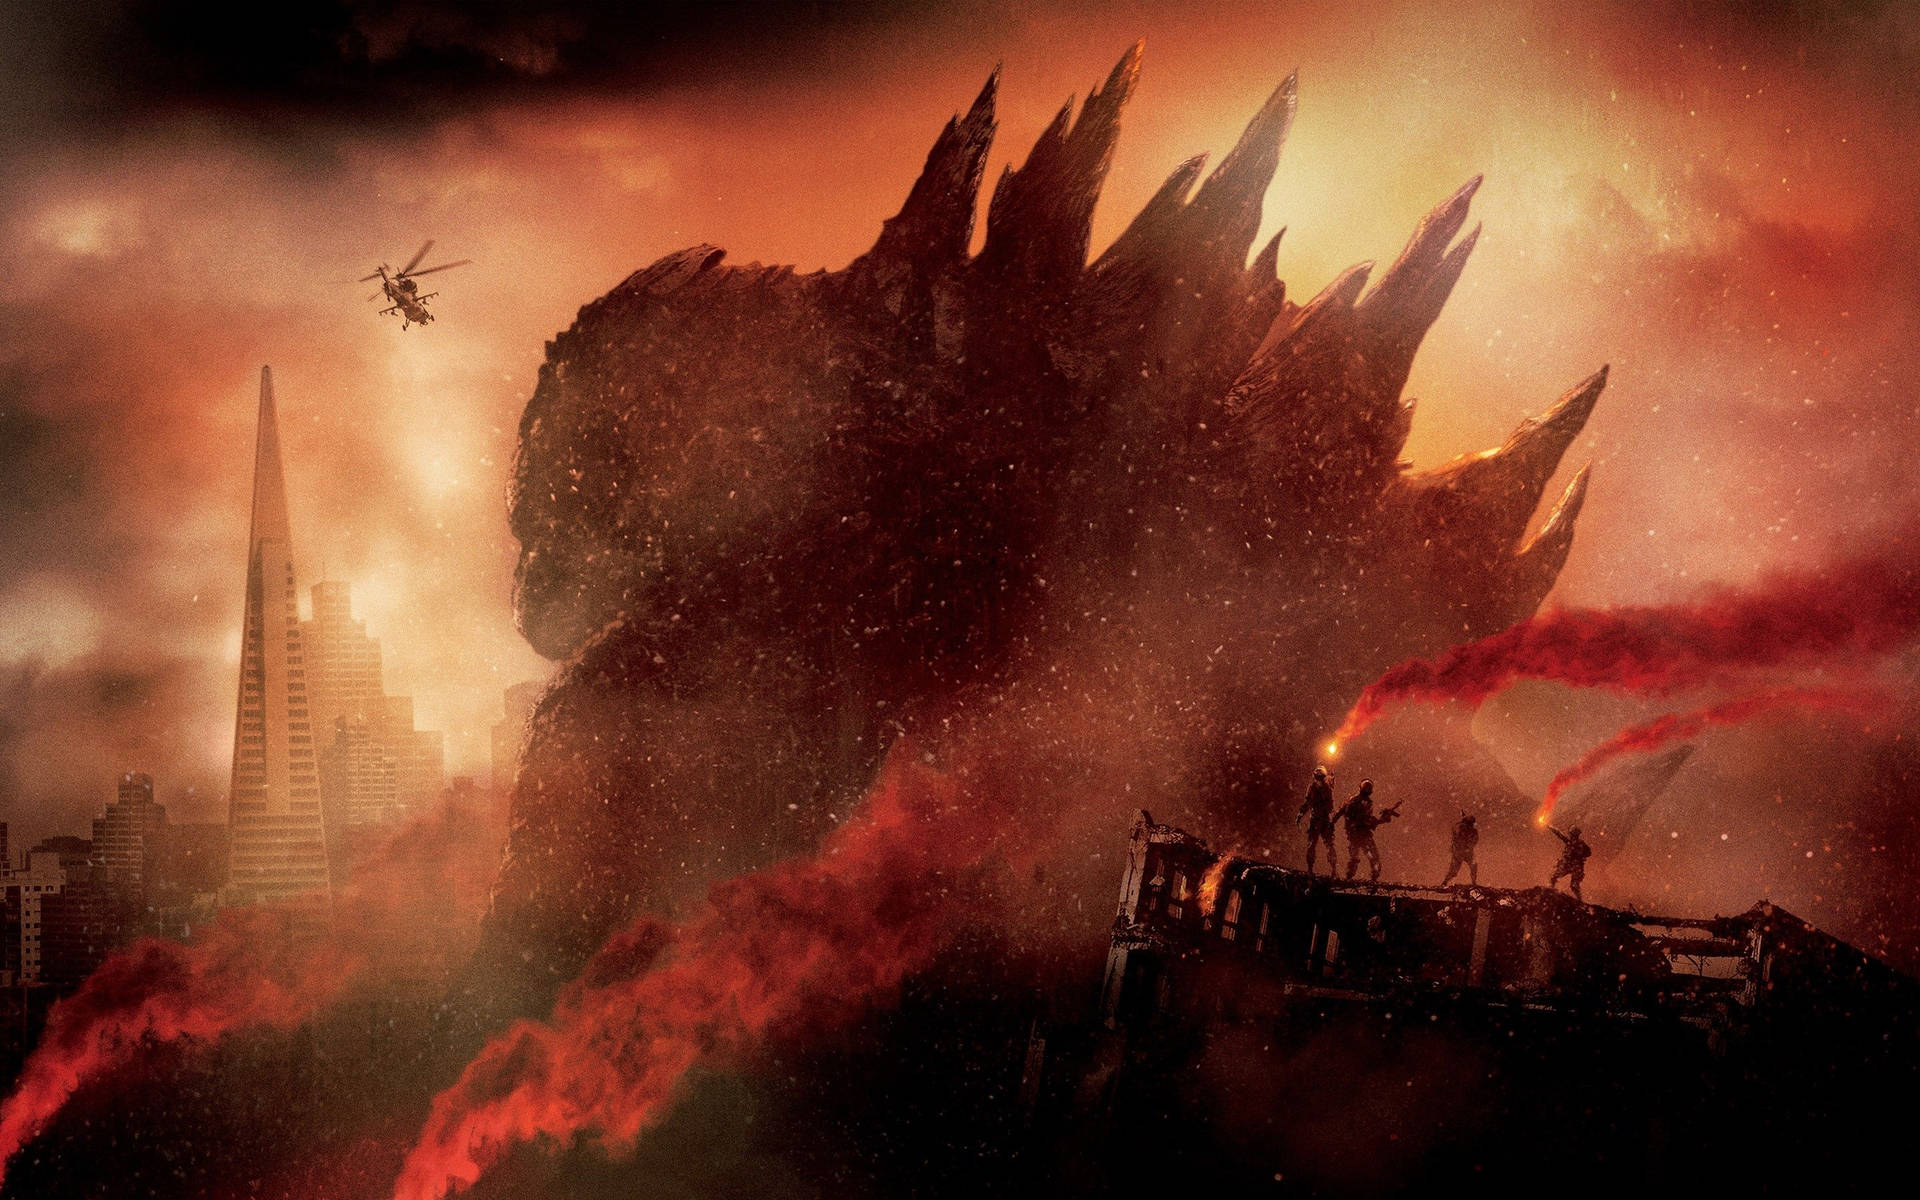 Godzilla Burns In Fire Background